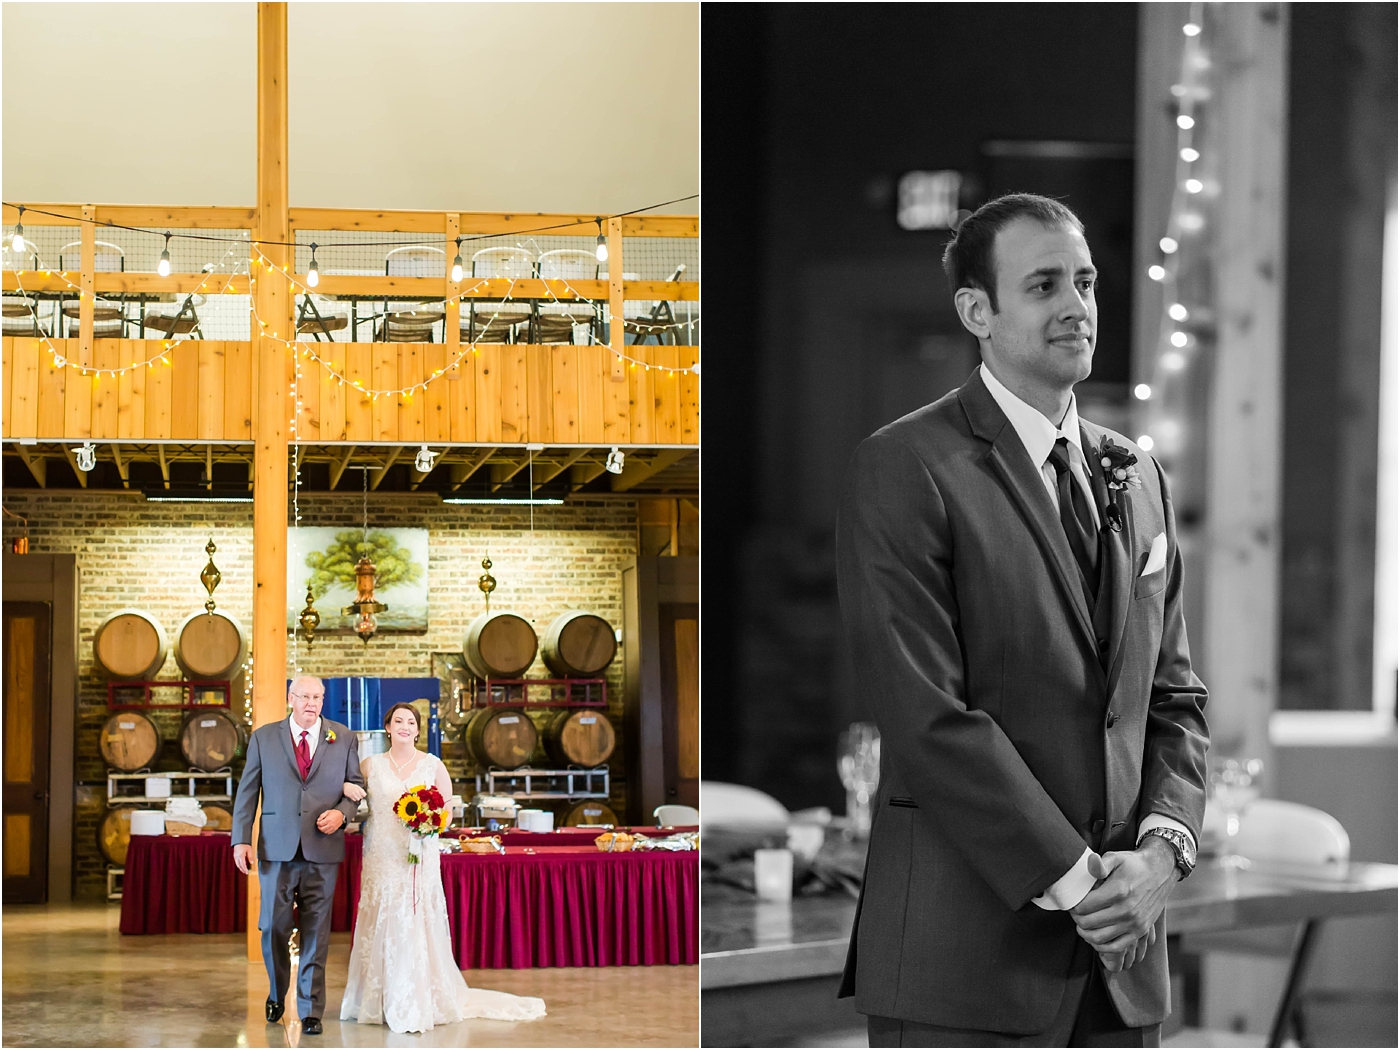 Loren Jackson Photography,Photographer Akron Ohio,Tool Shed at Breitenbach Winery Wedding,cleveland wedding photography,